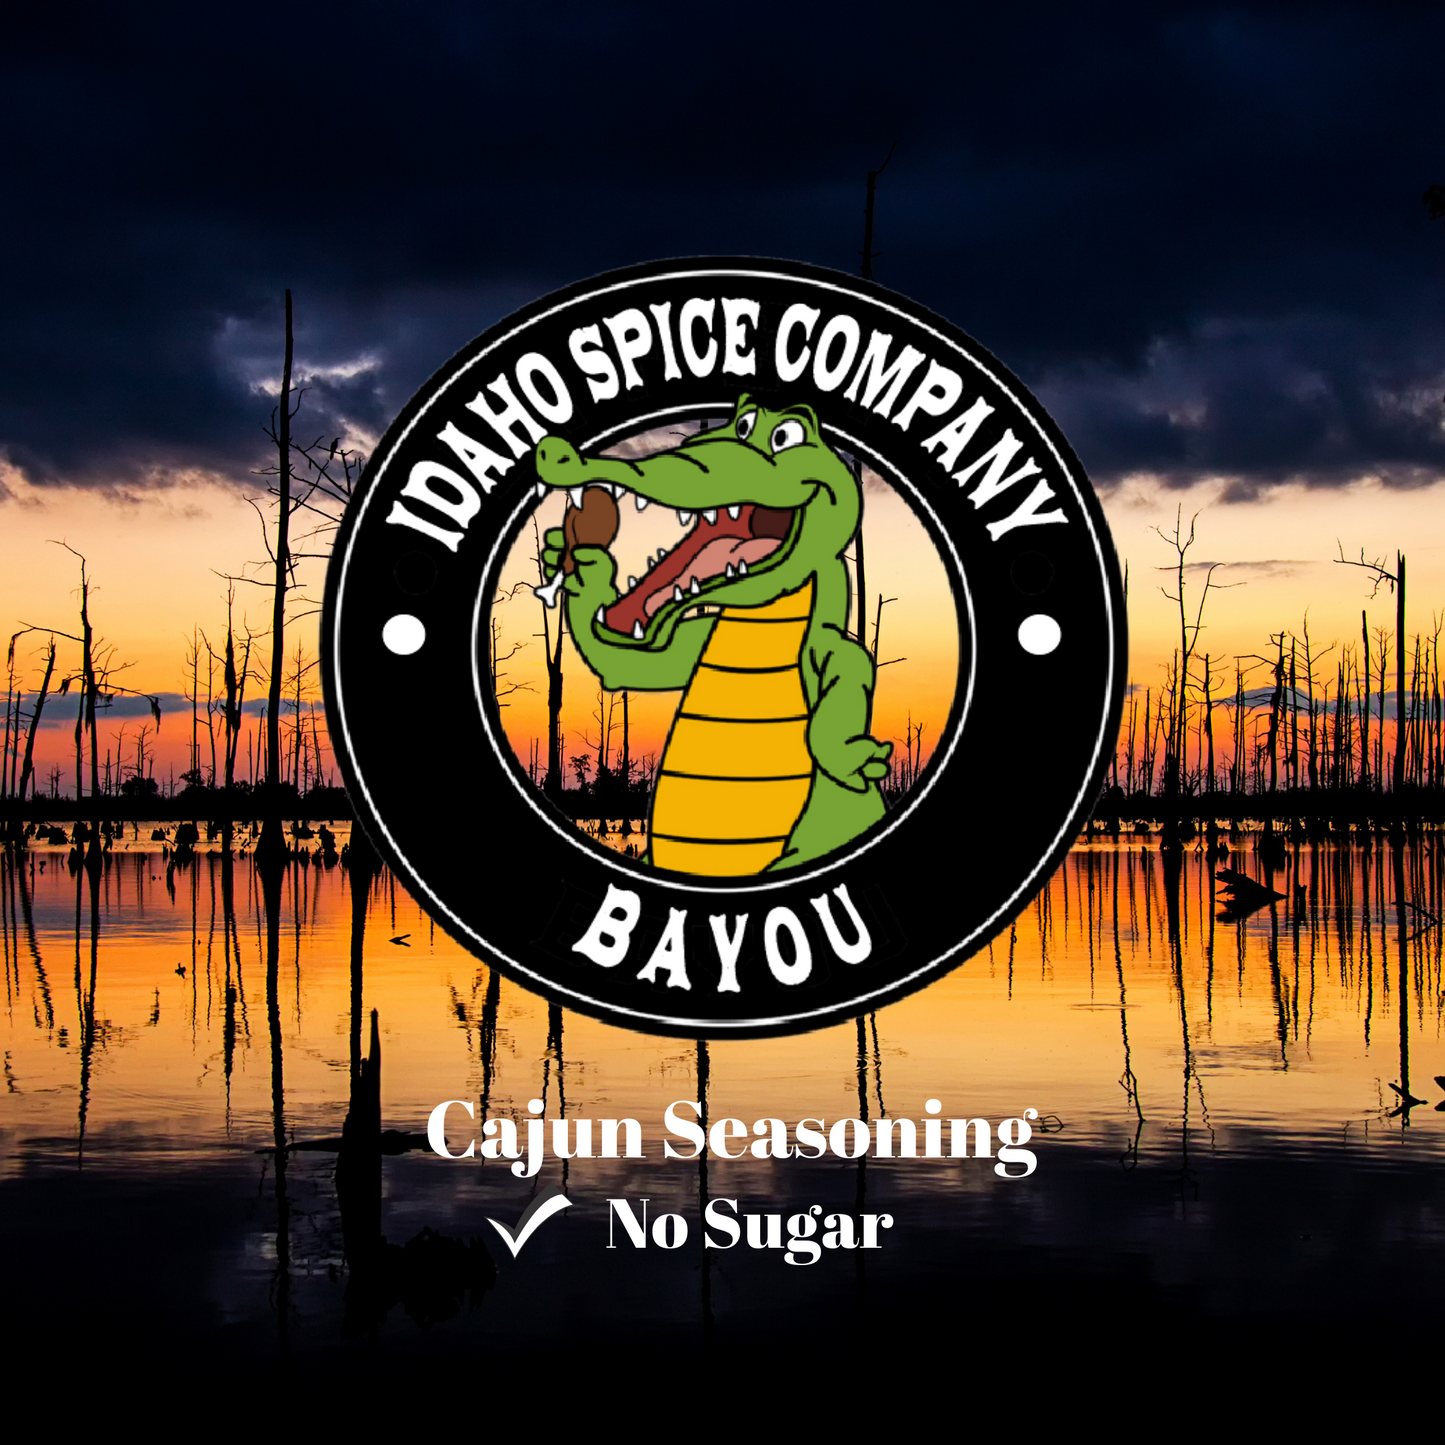 Bayou - Cajun Seasoning